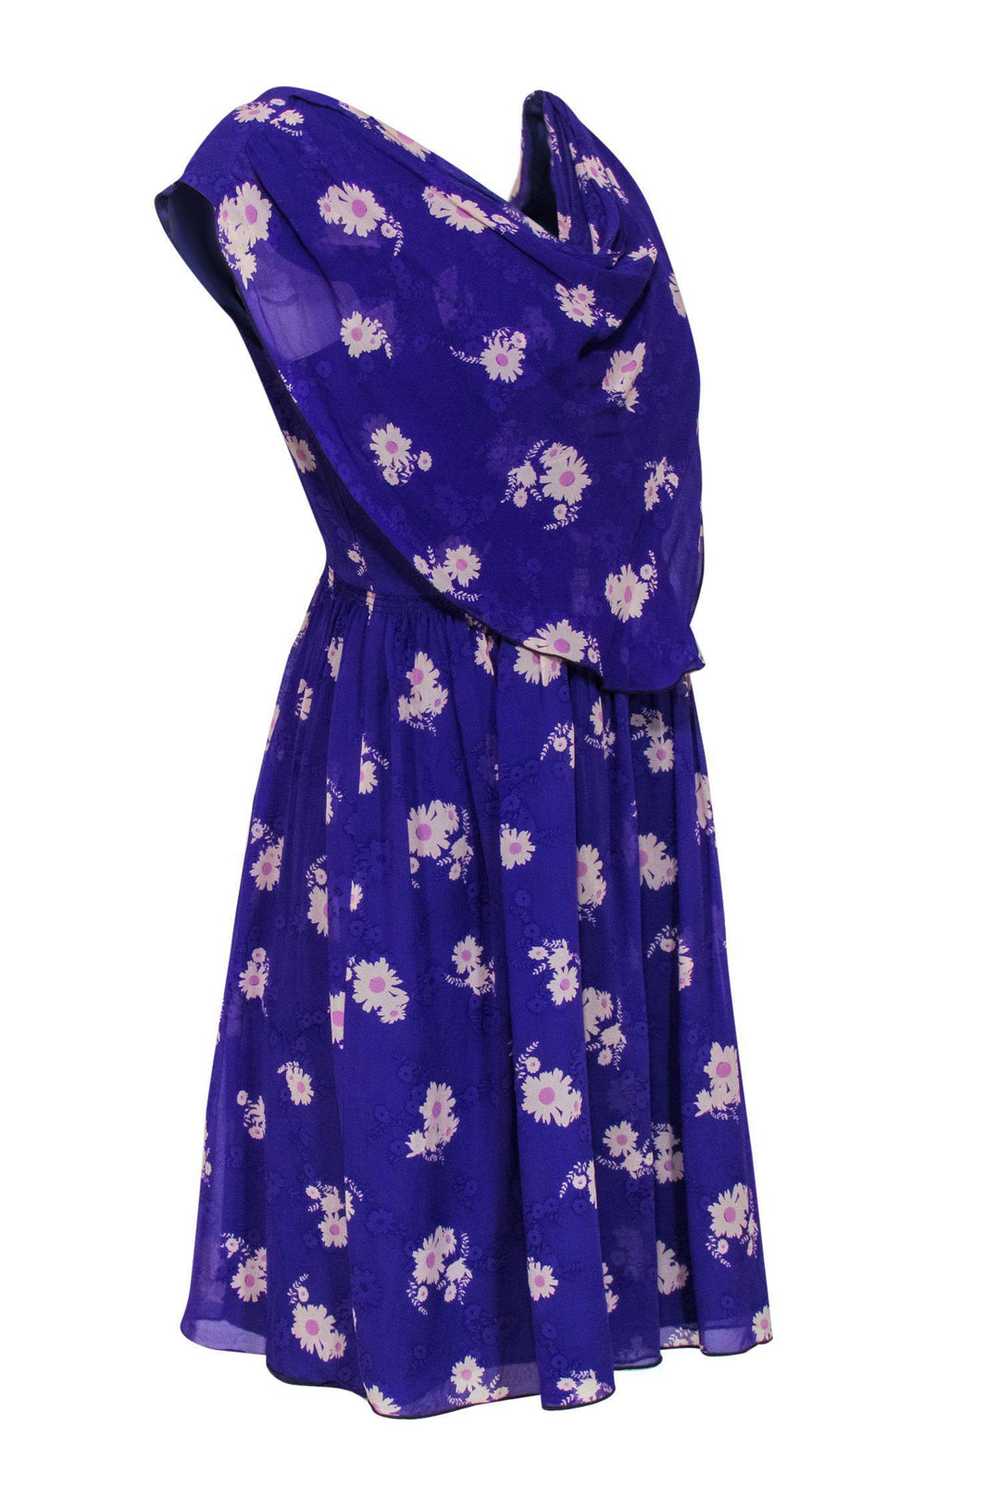 Anna Sui - Purple Floral Silk Draped Dress Sz 4 - image 2